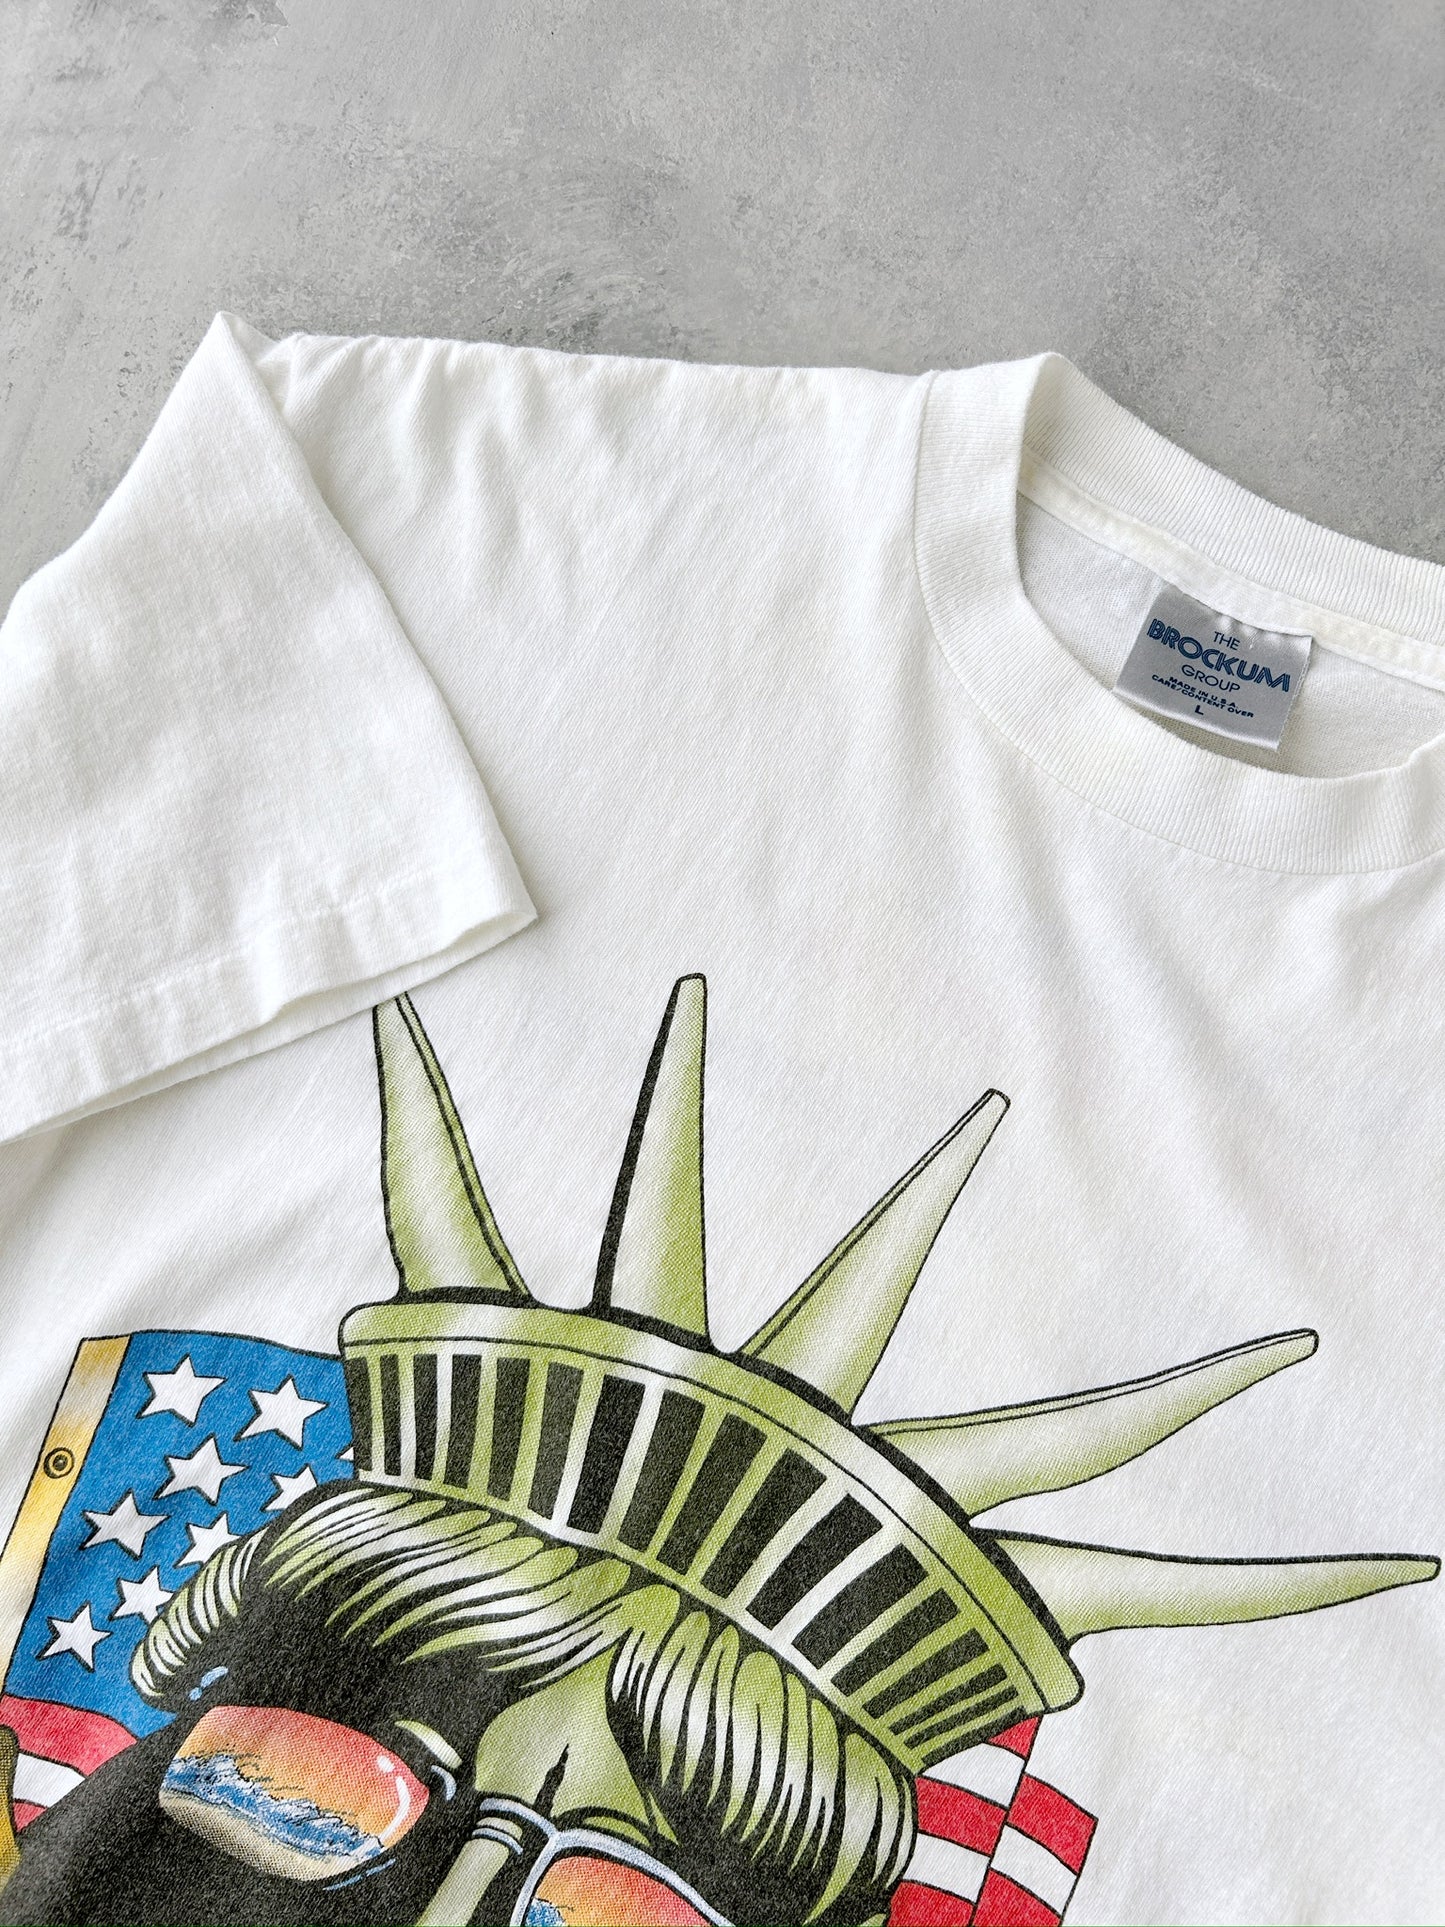 The Beach Boys T-Shirt '91 - Medium